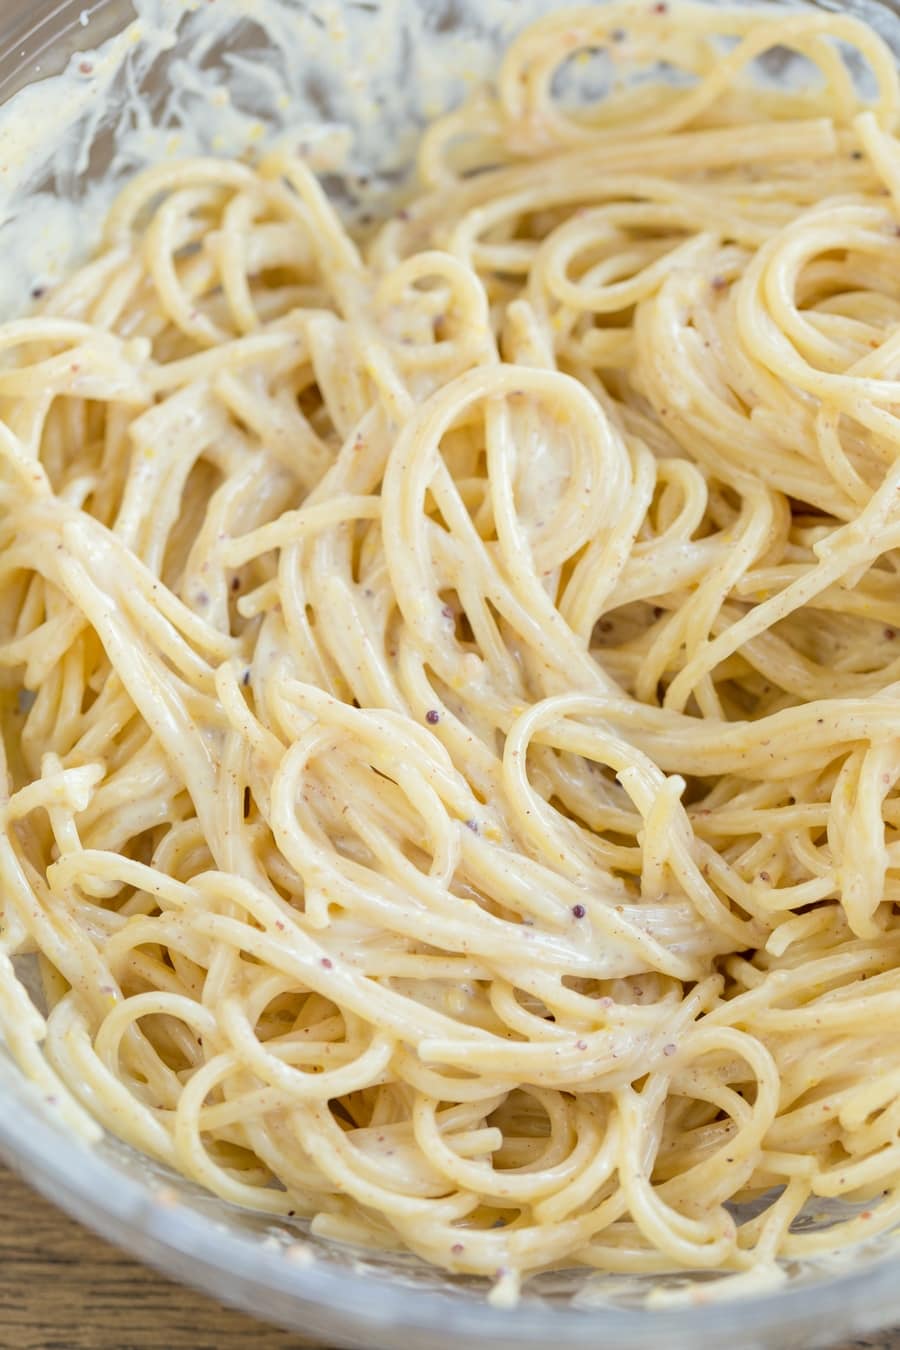 Spaghetti with creamy mustard sauce in a bowl.